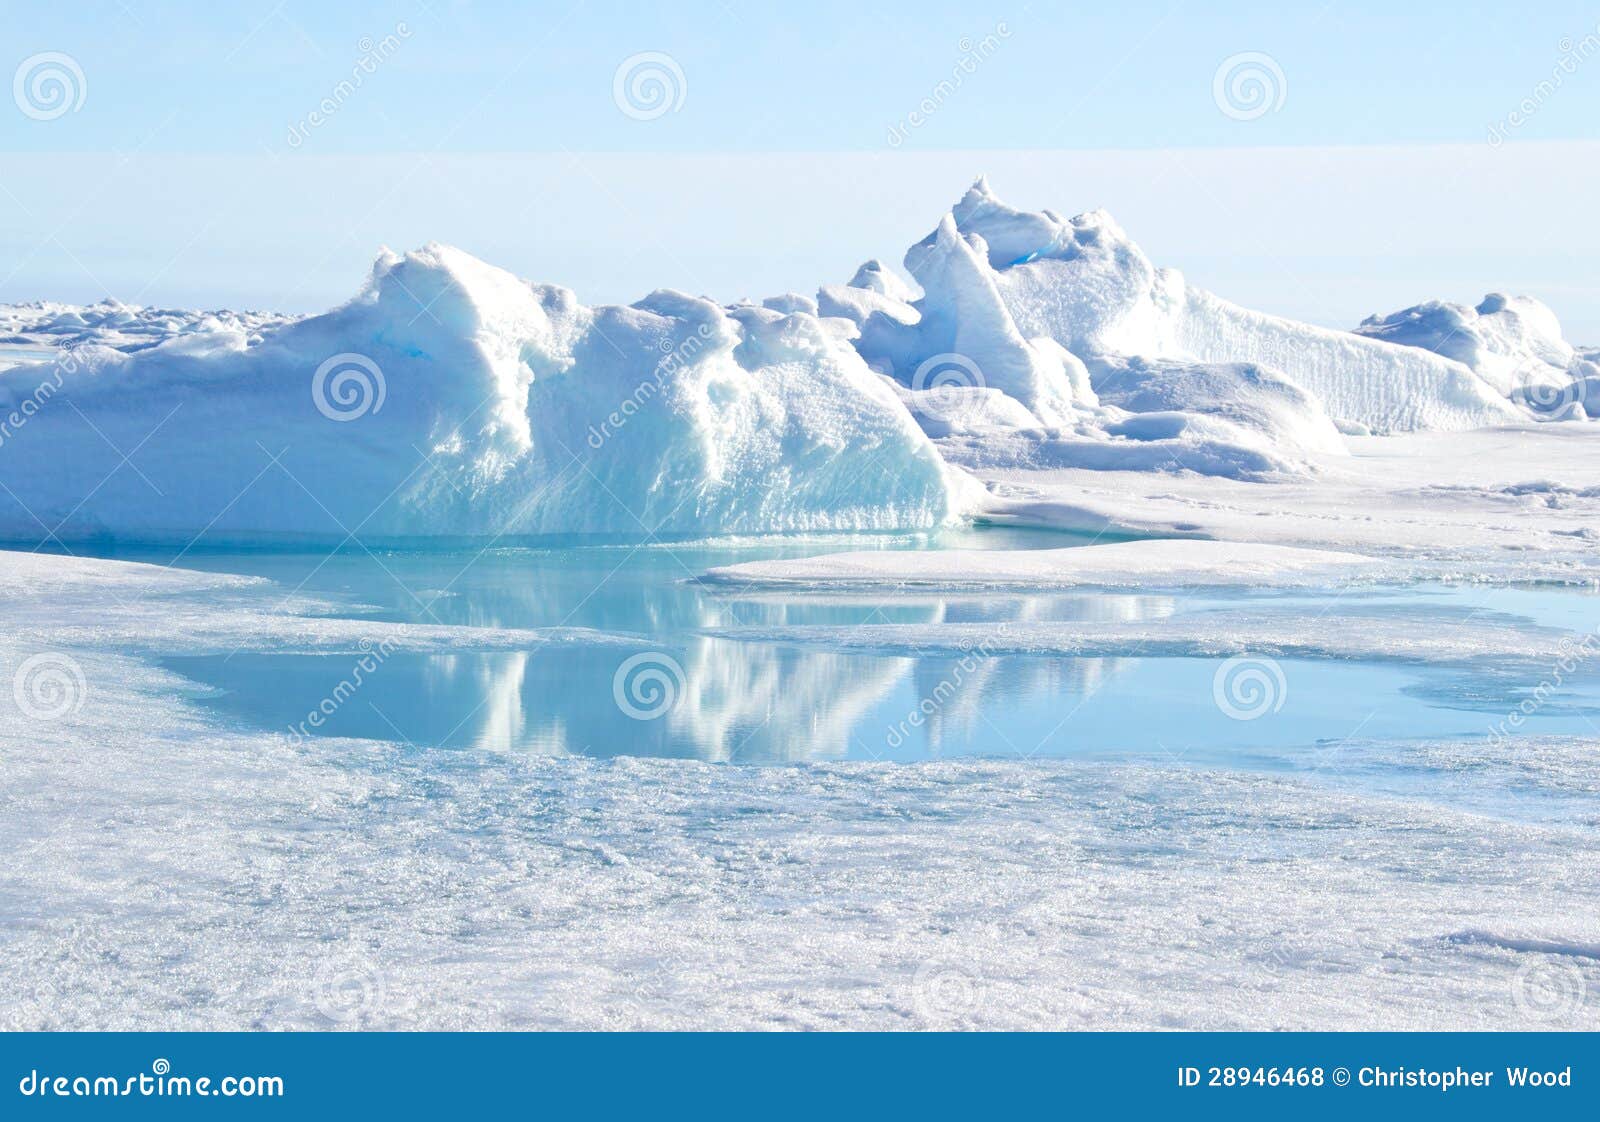 geographic north pole